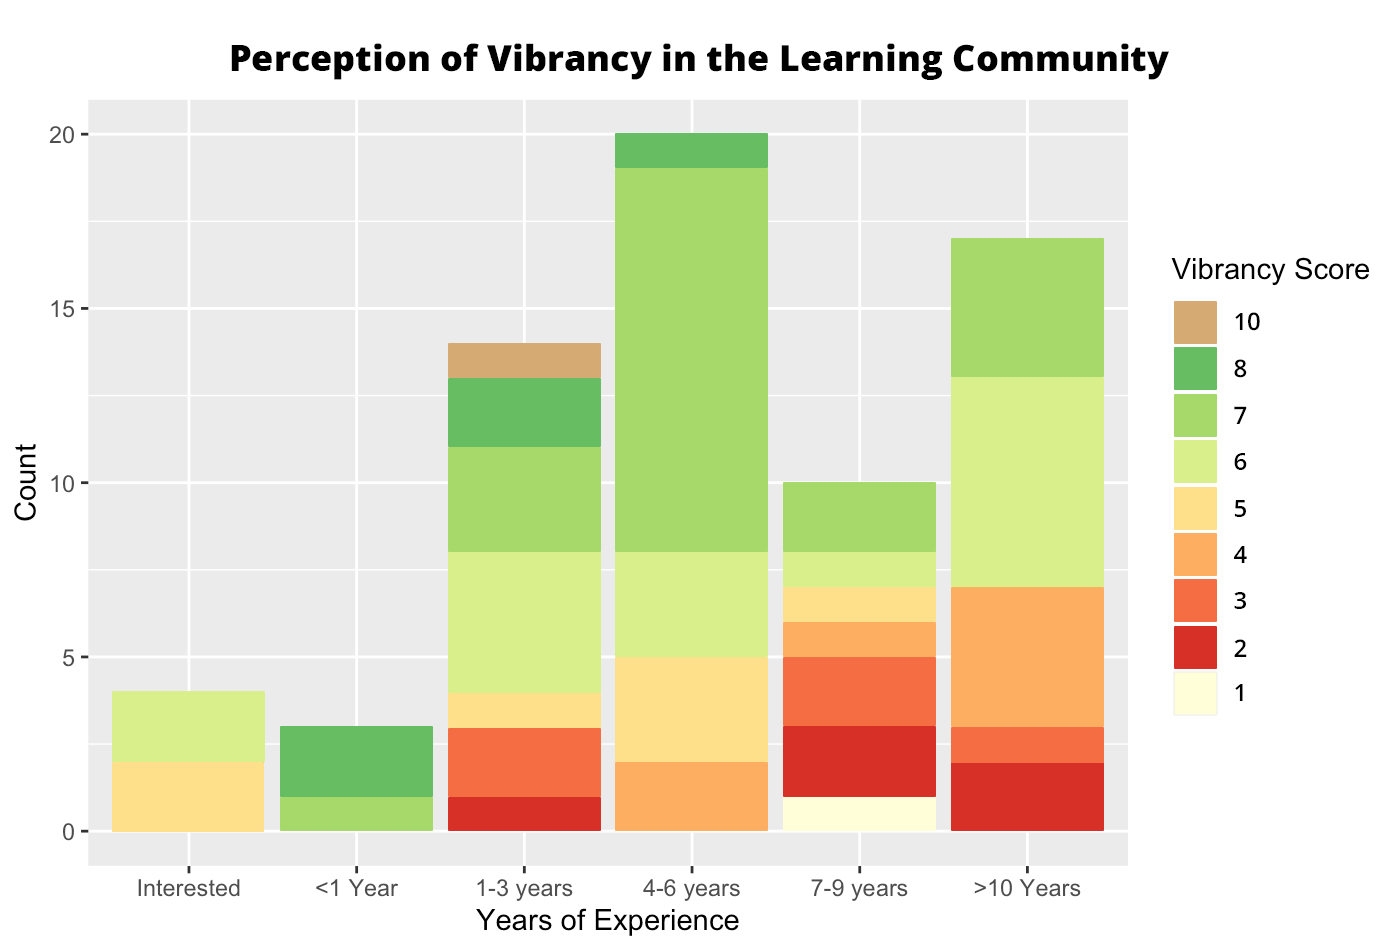 Perception of Vibrancy in Community